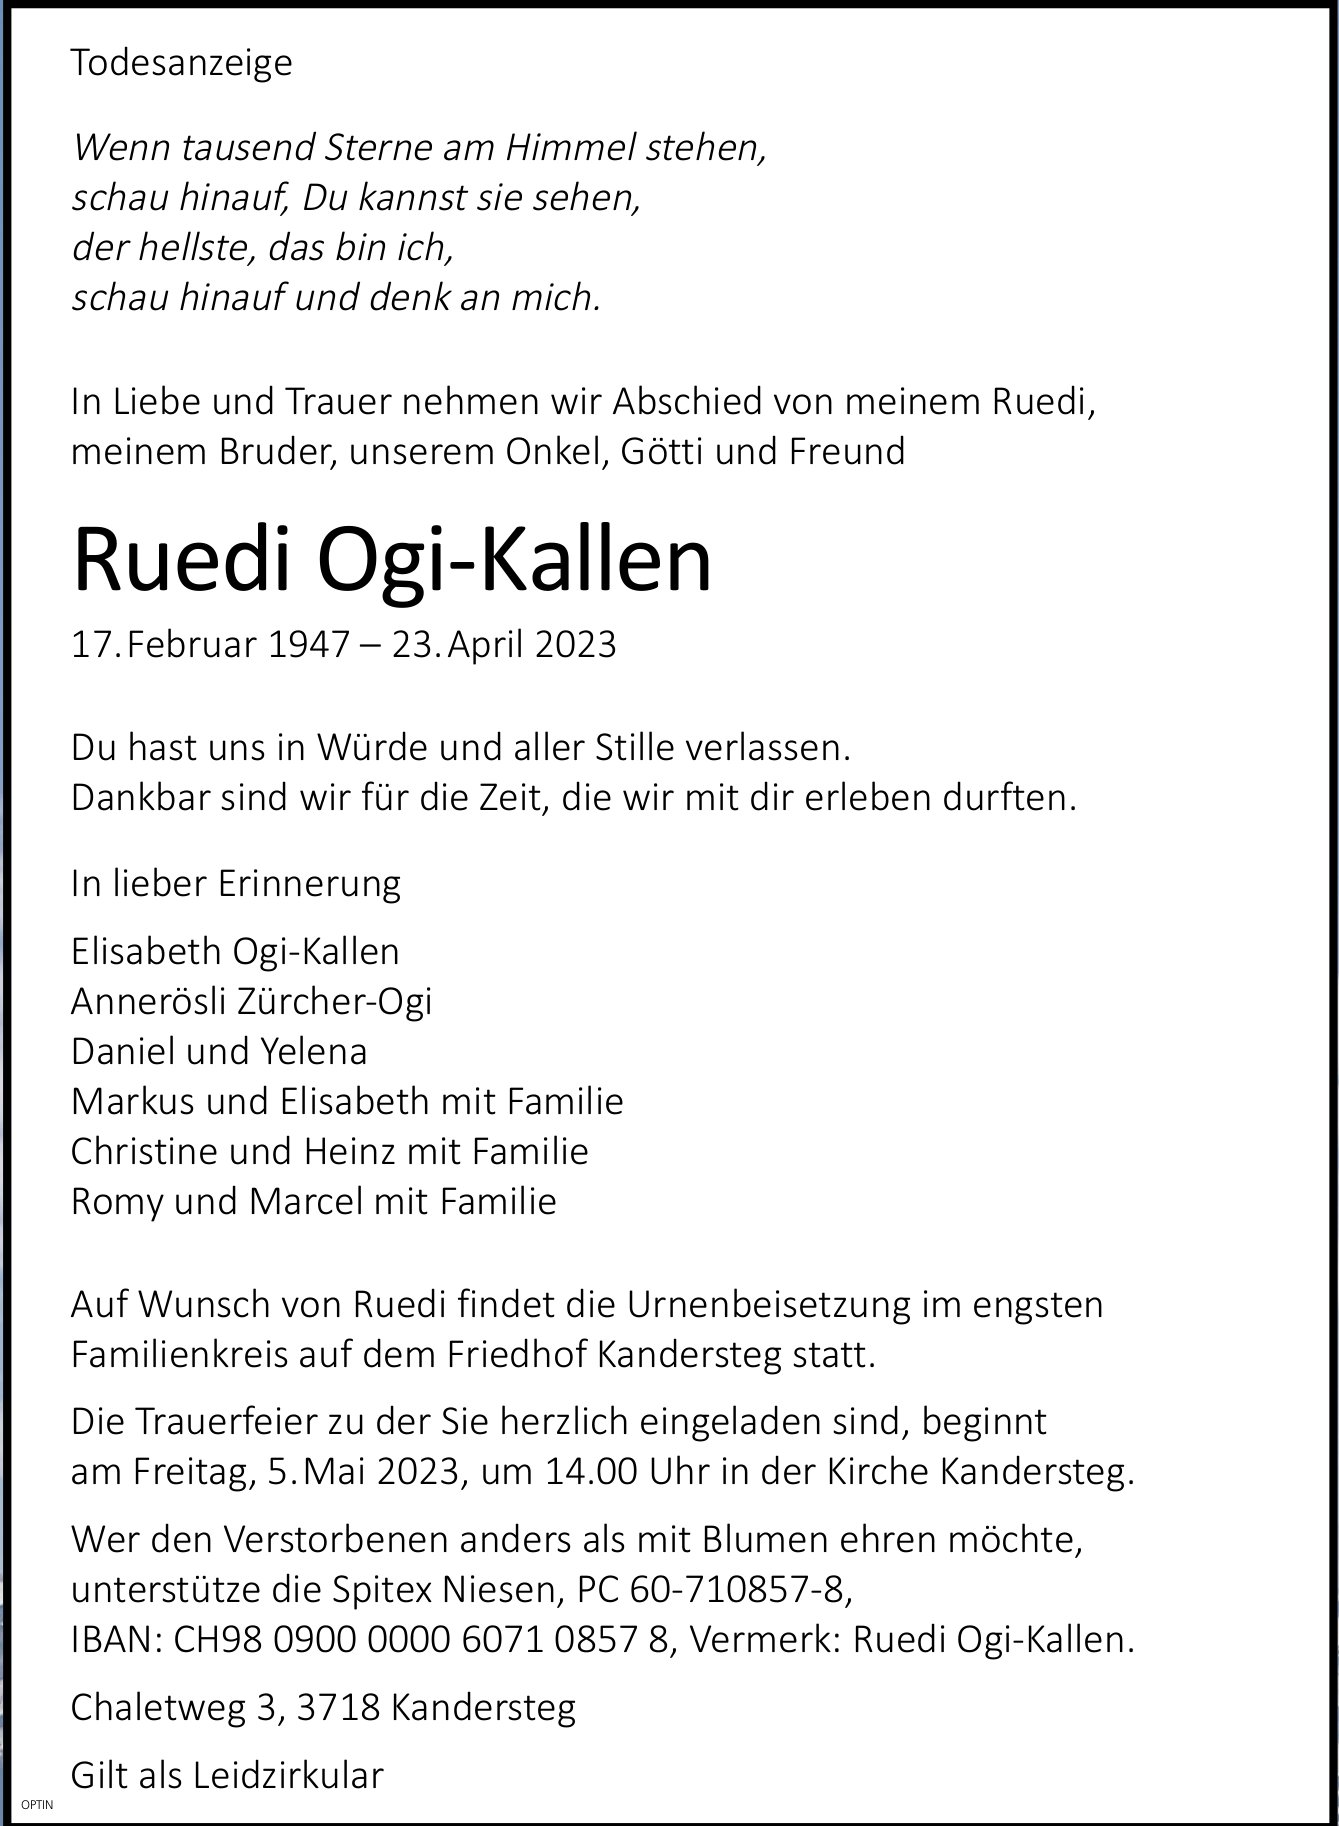 Ruedi Ogi-Kallen, April 2023 / TA